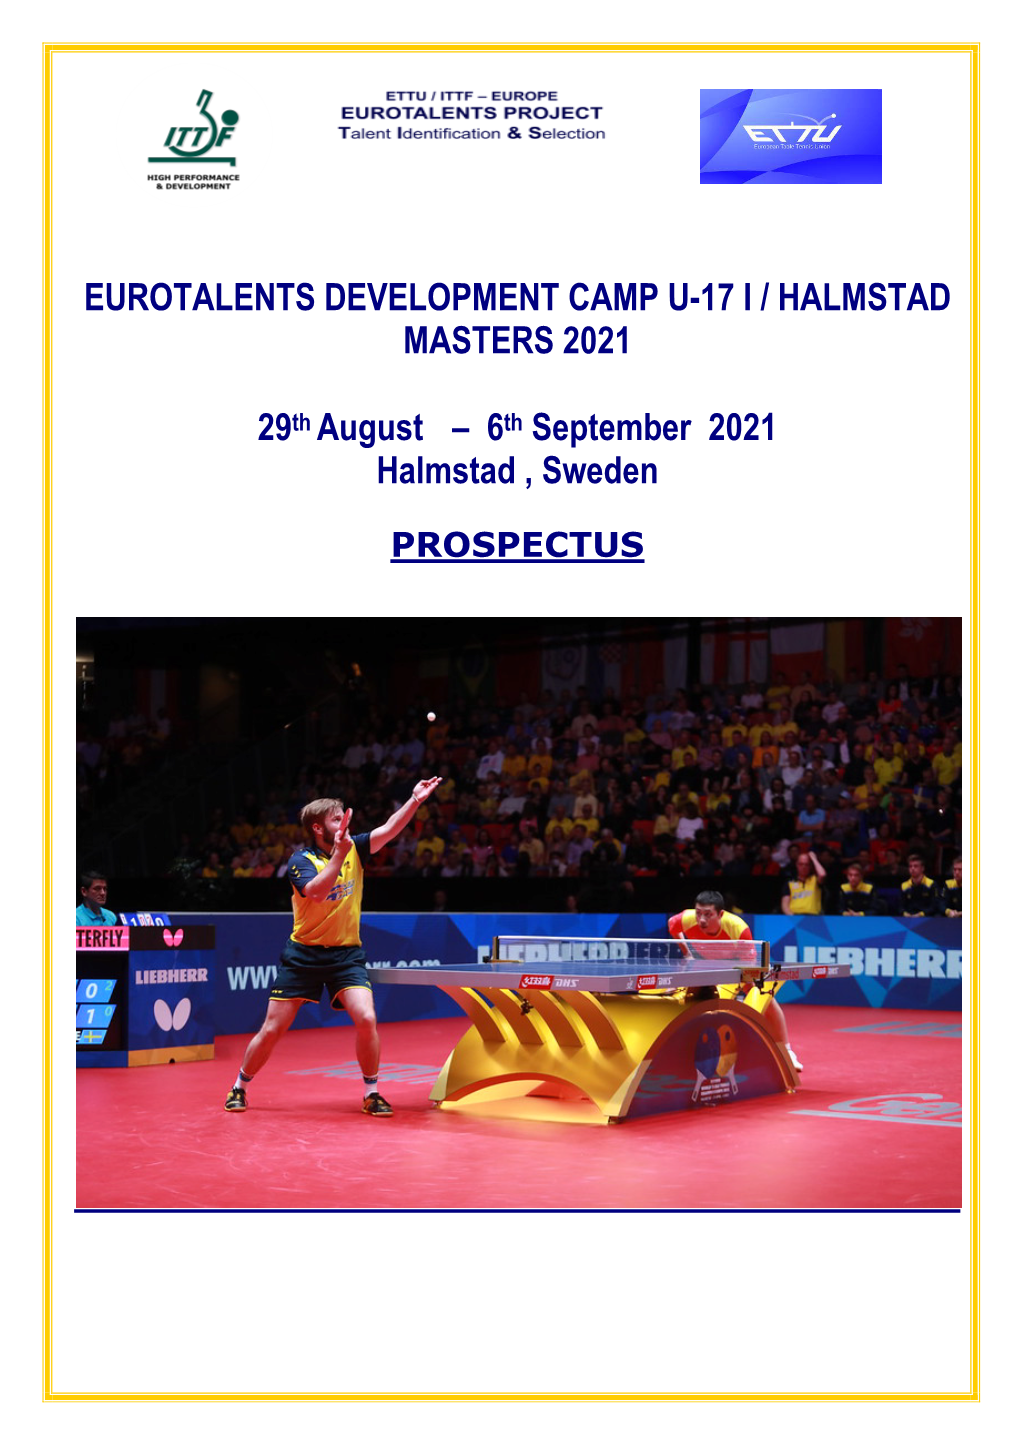 Eurotalents Development Camp U-17 I / Halmstad Masters 2021